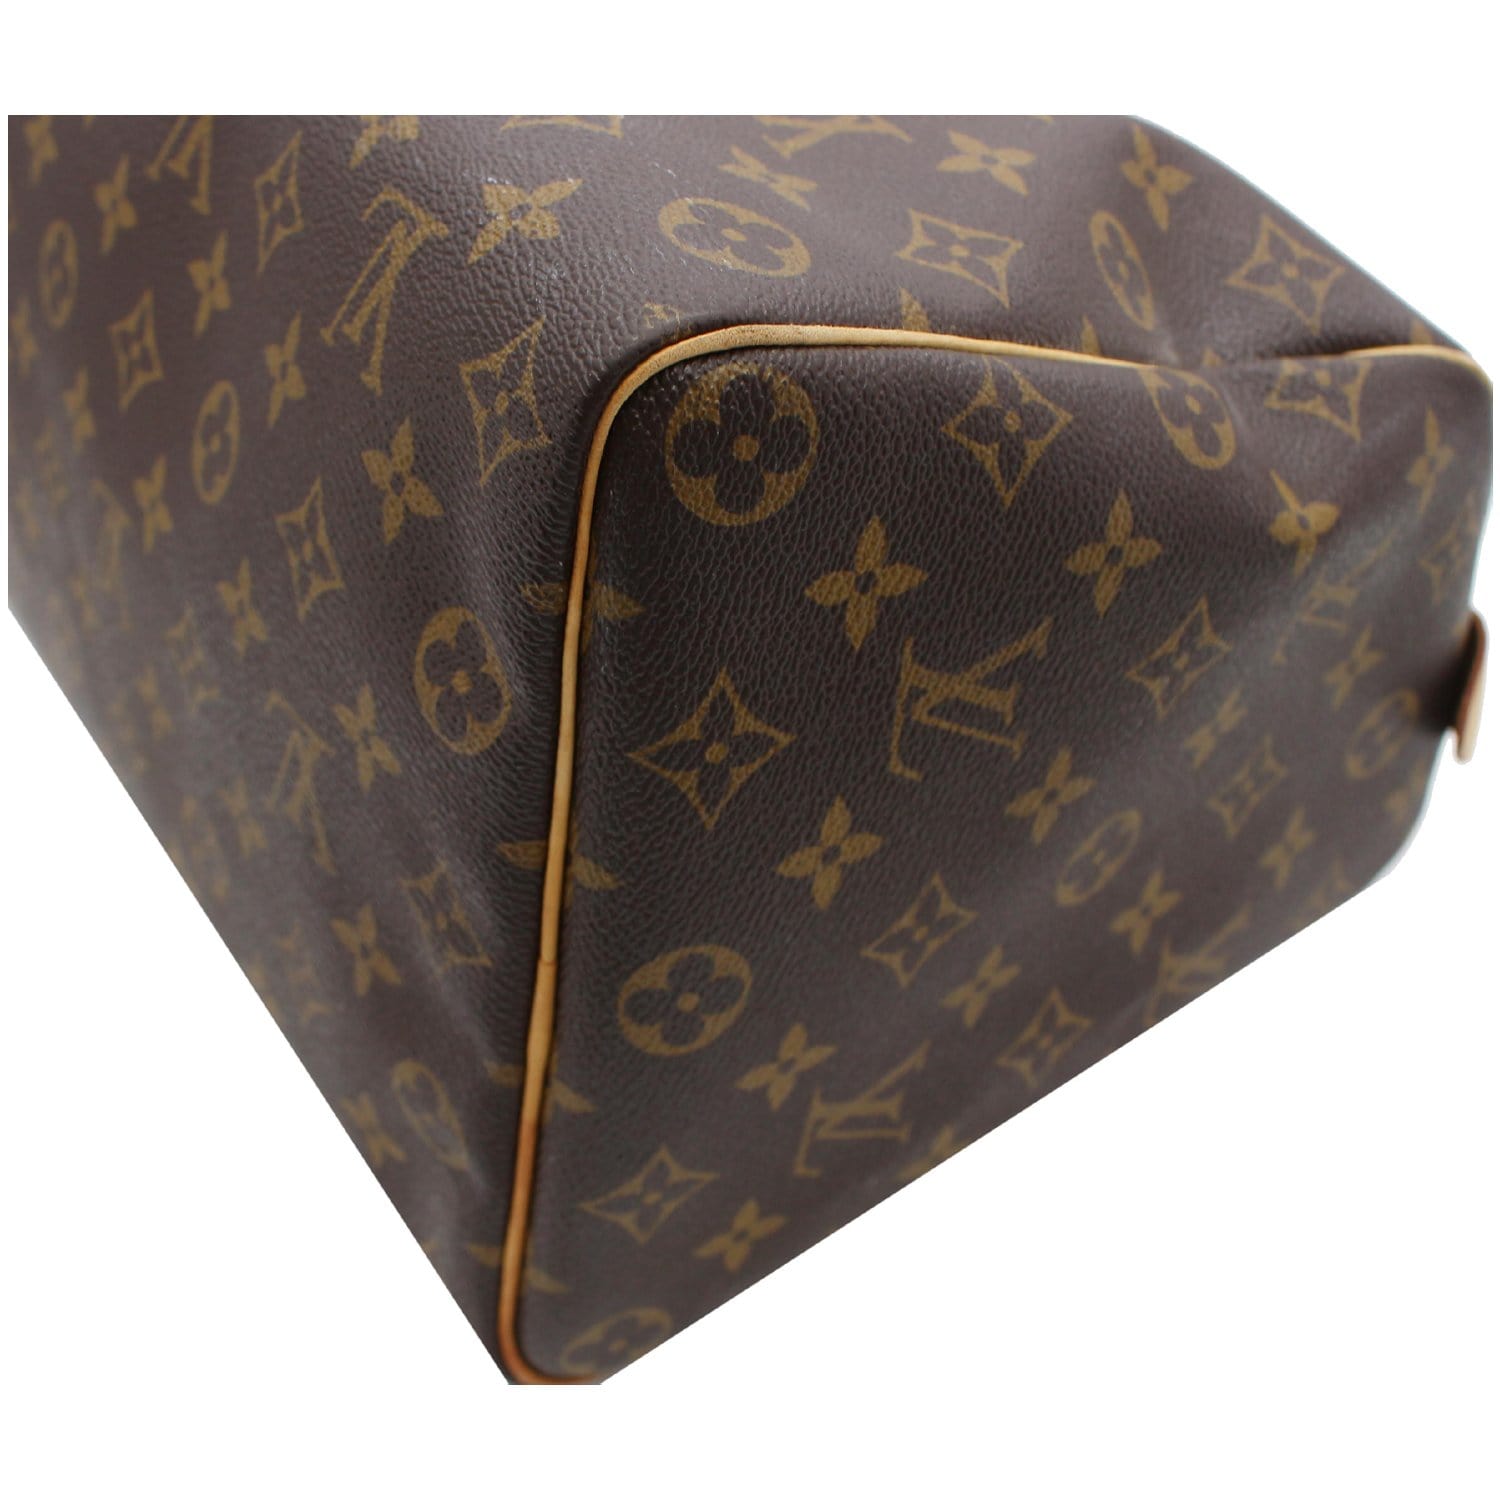 Louis Vuitton Speedy Handbag 352655